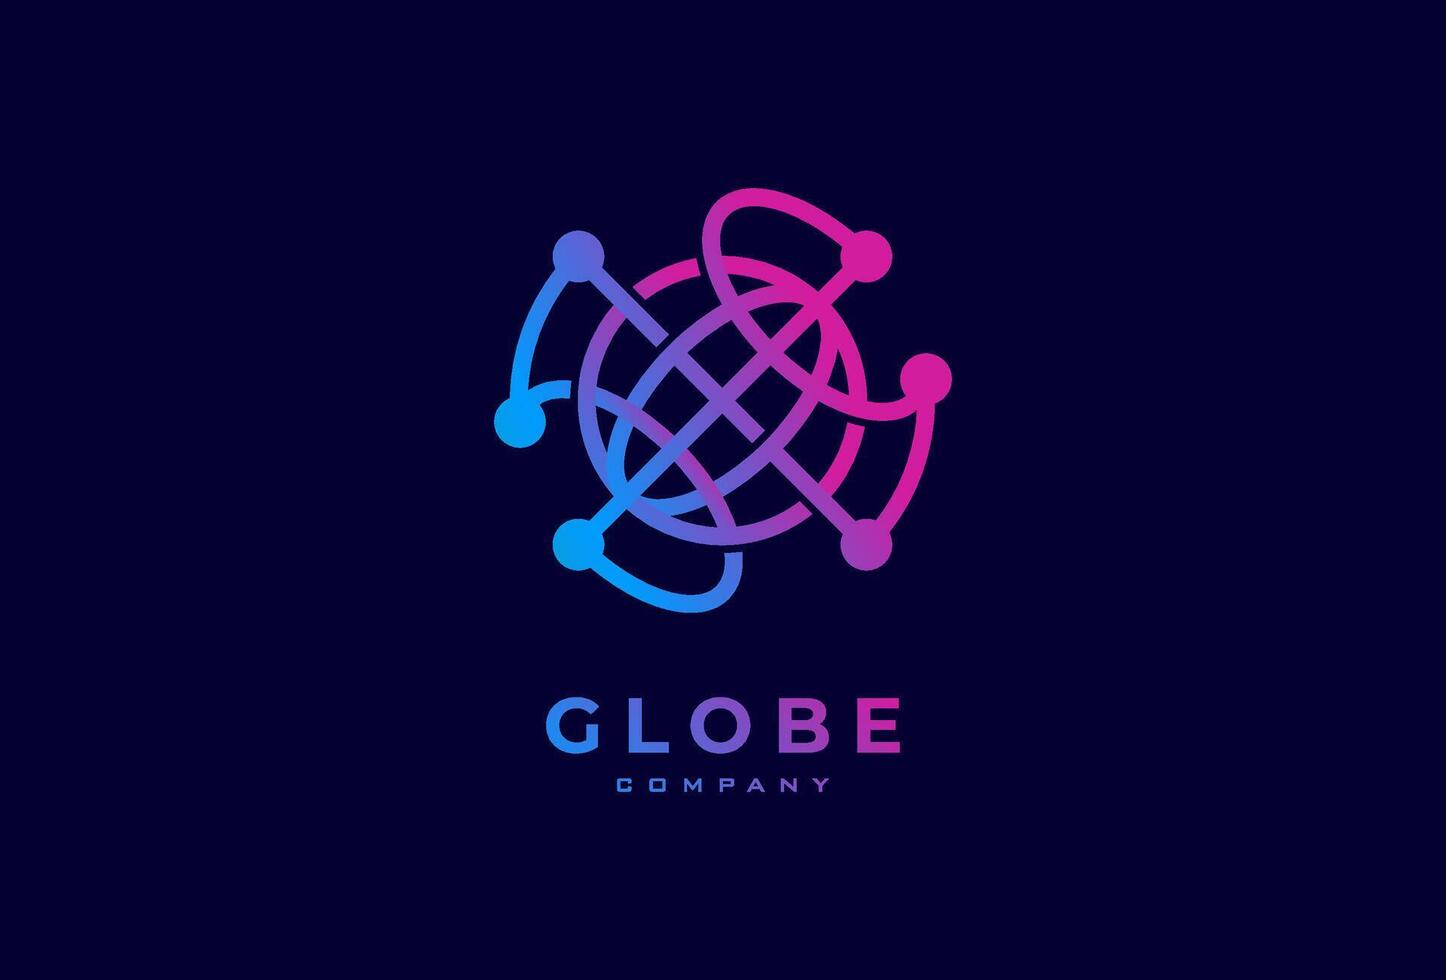 globo tecnología logo diseño, mundo globo logo modelo elemento, usable para tecnología, marca y empresa logotipos, ilustración vector